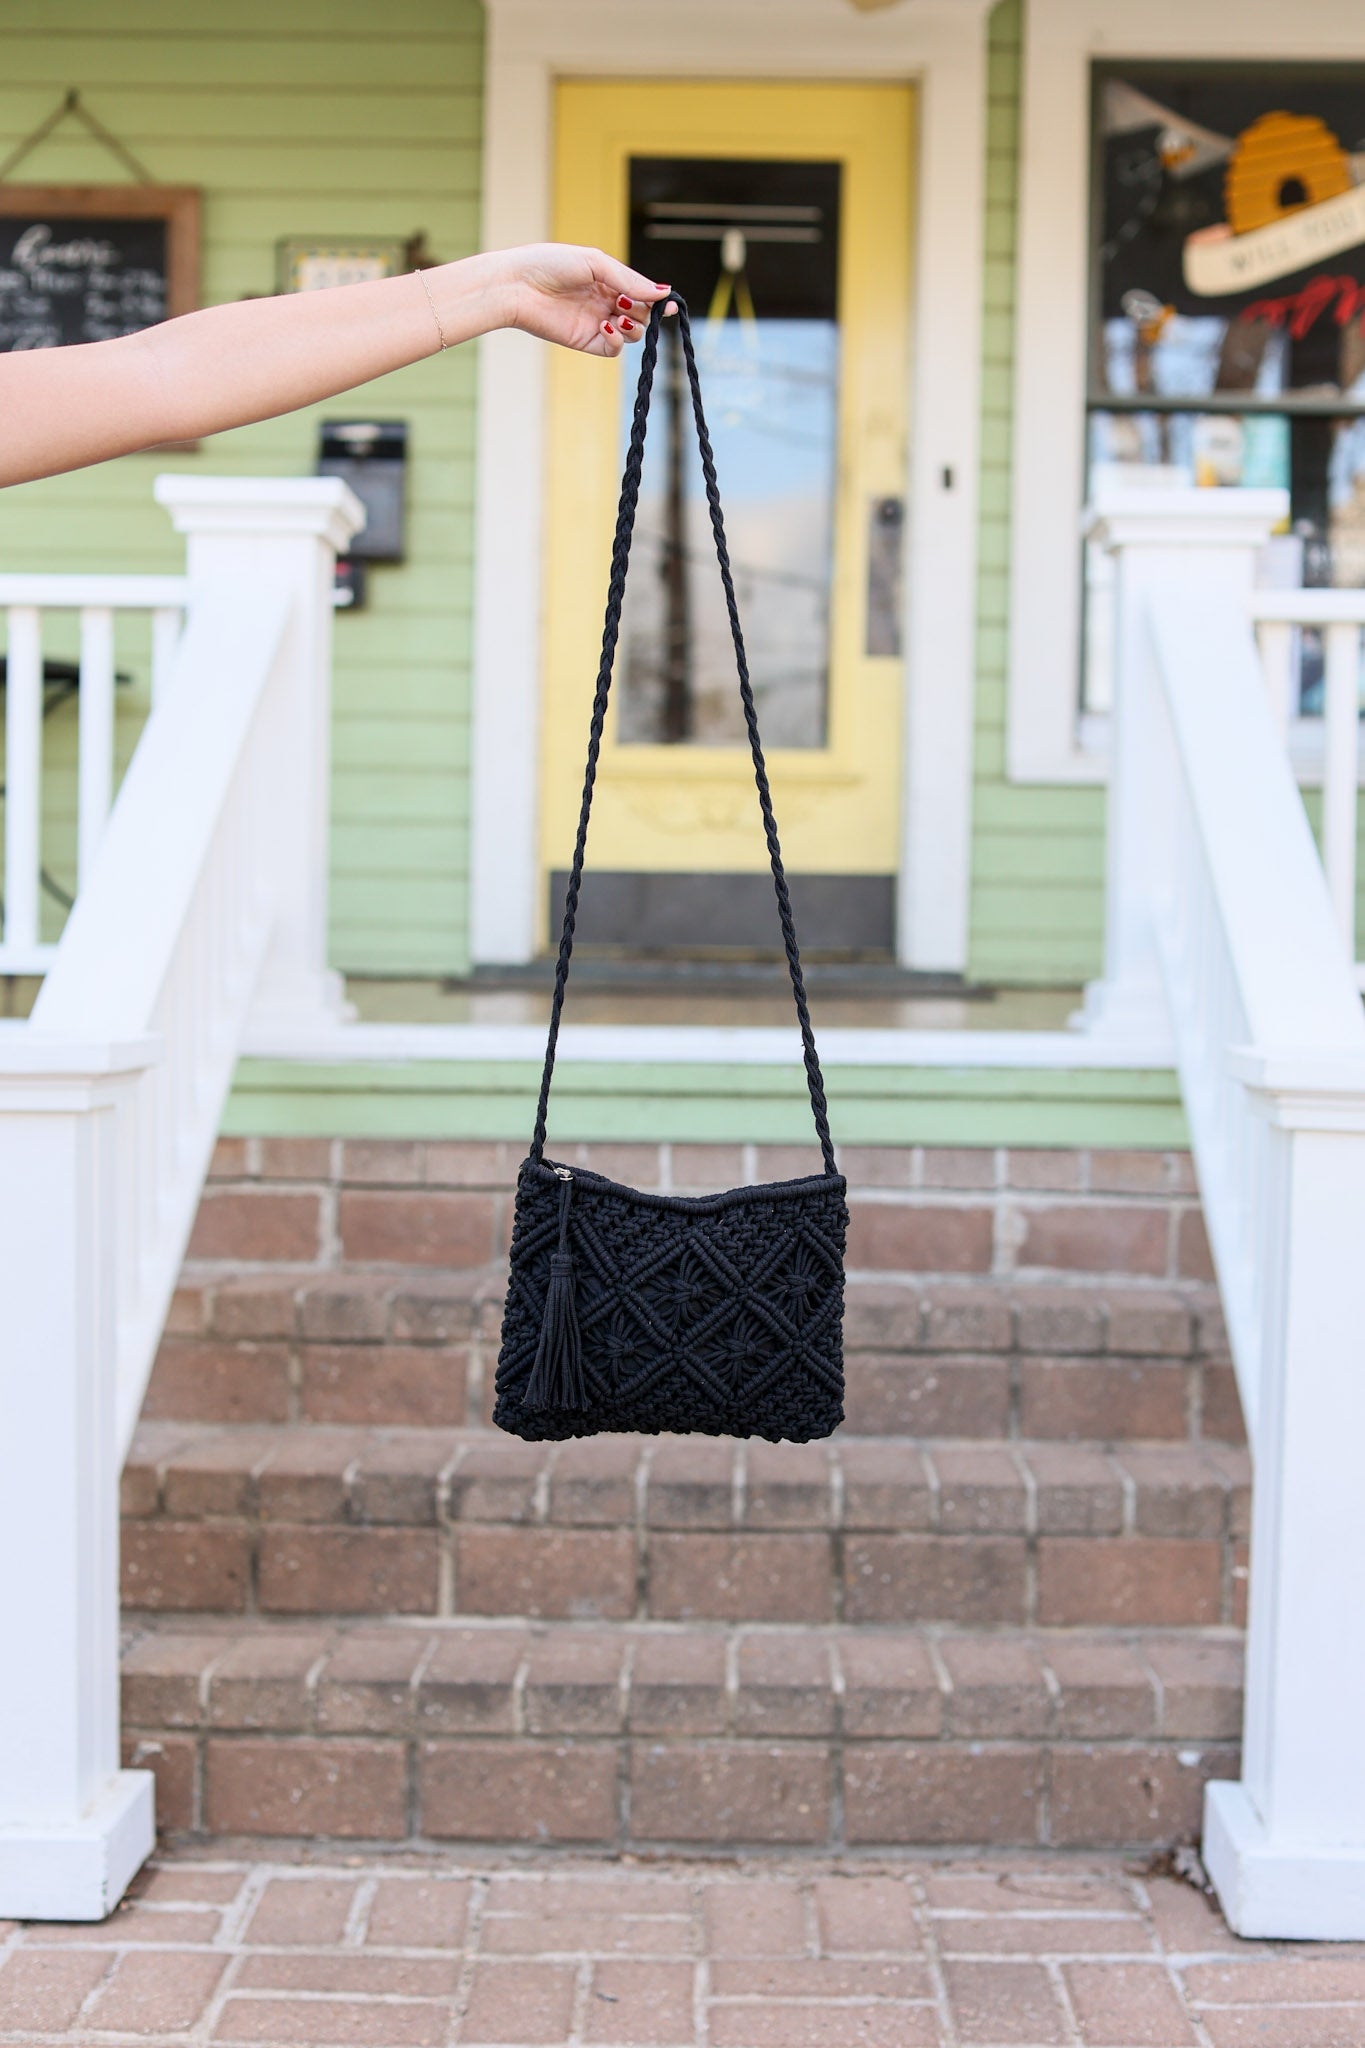 Crochet Zipper Bag - Black